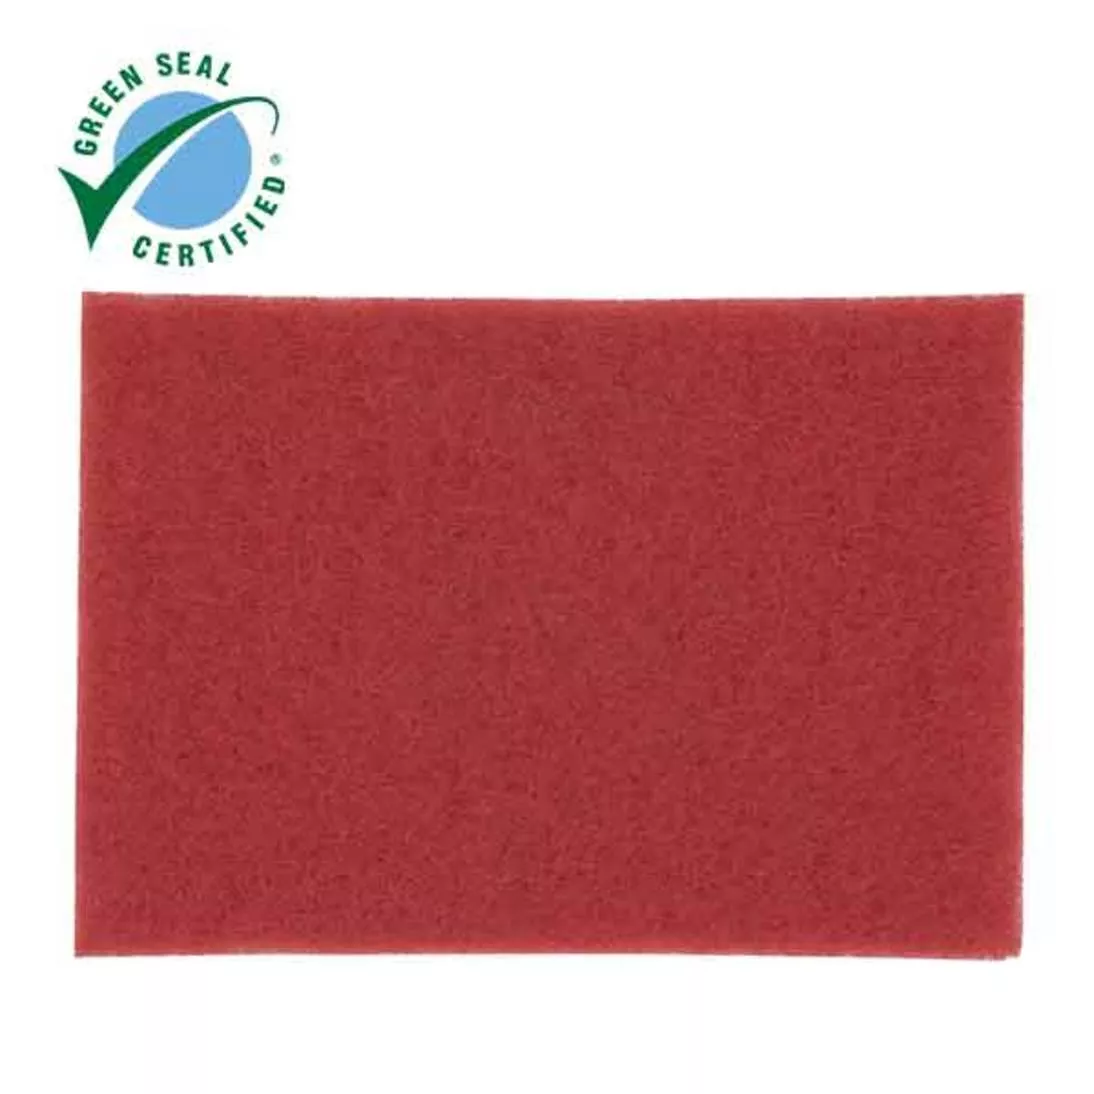 3M™ Red Buffer Pad 5100, 12 in x 18 in, 5/Case